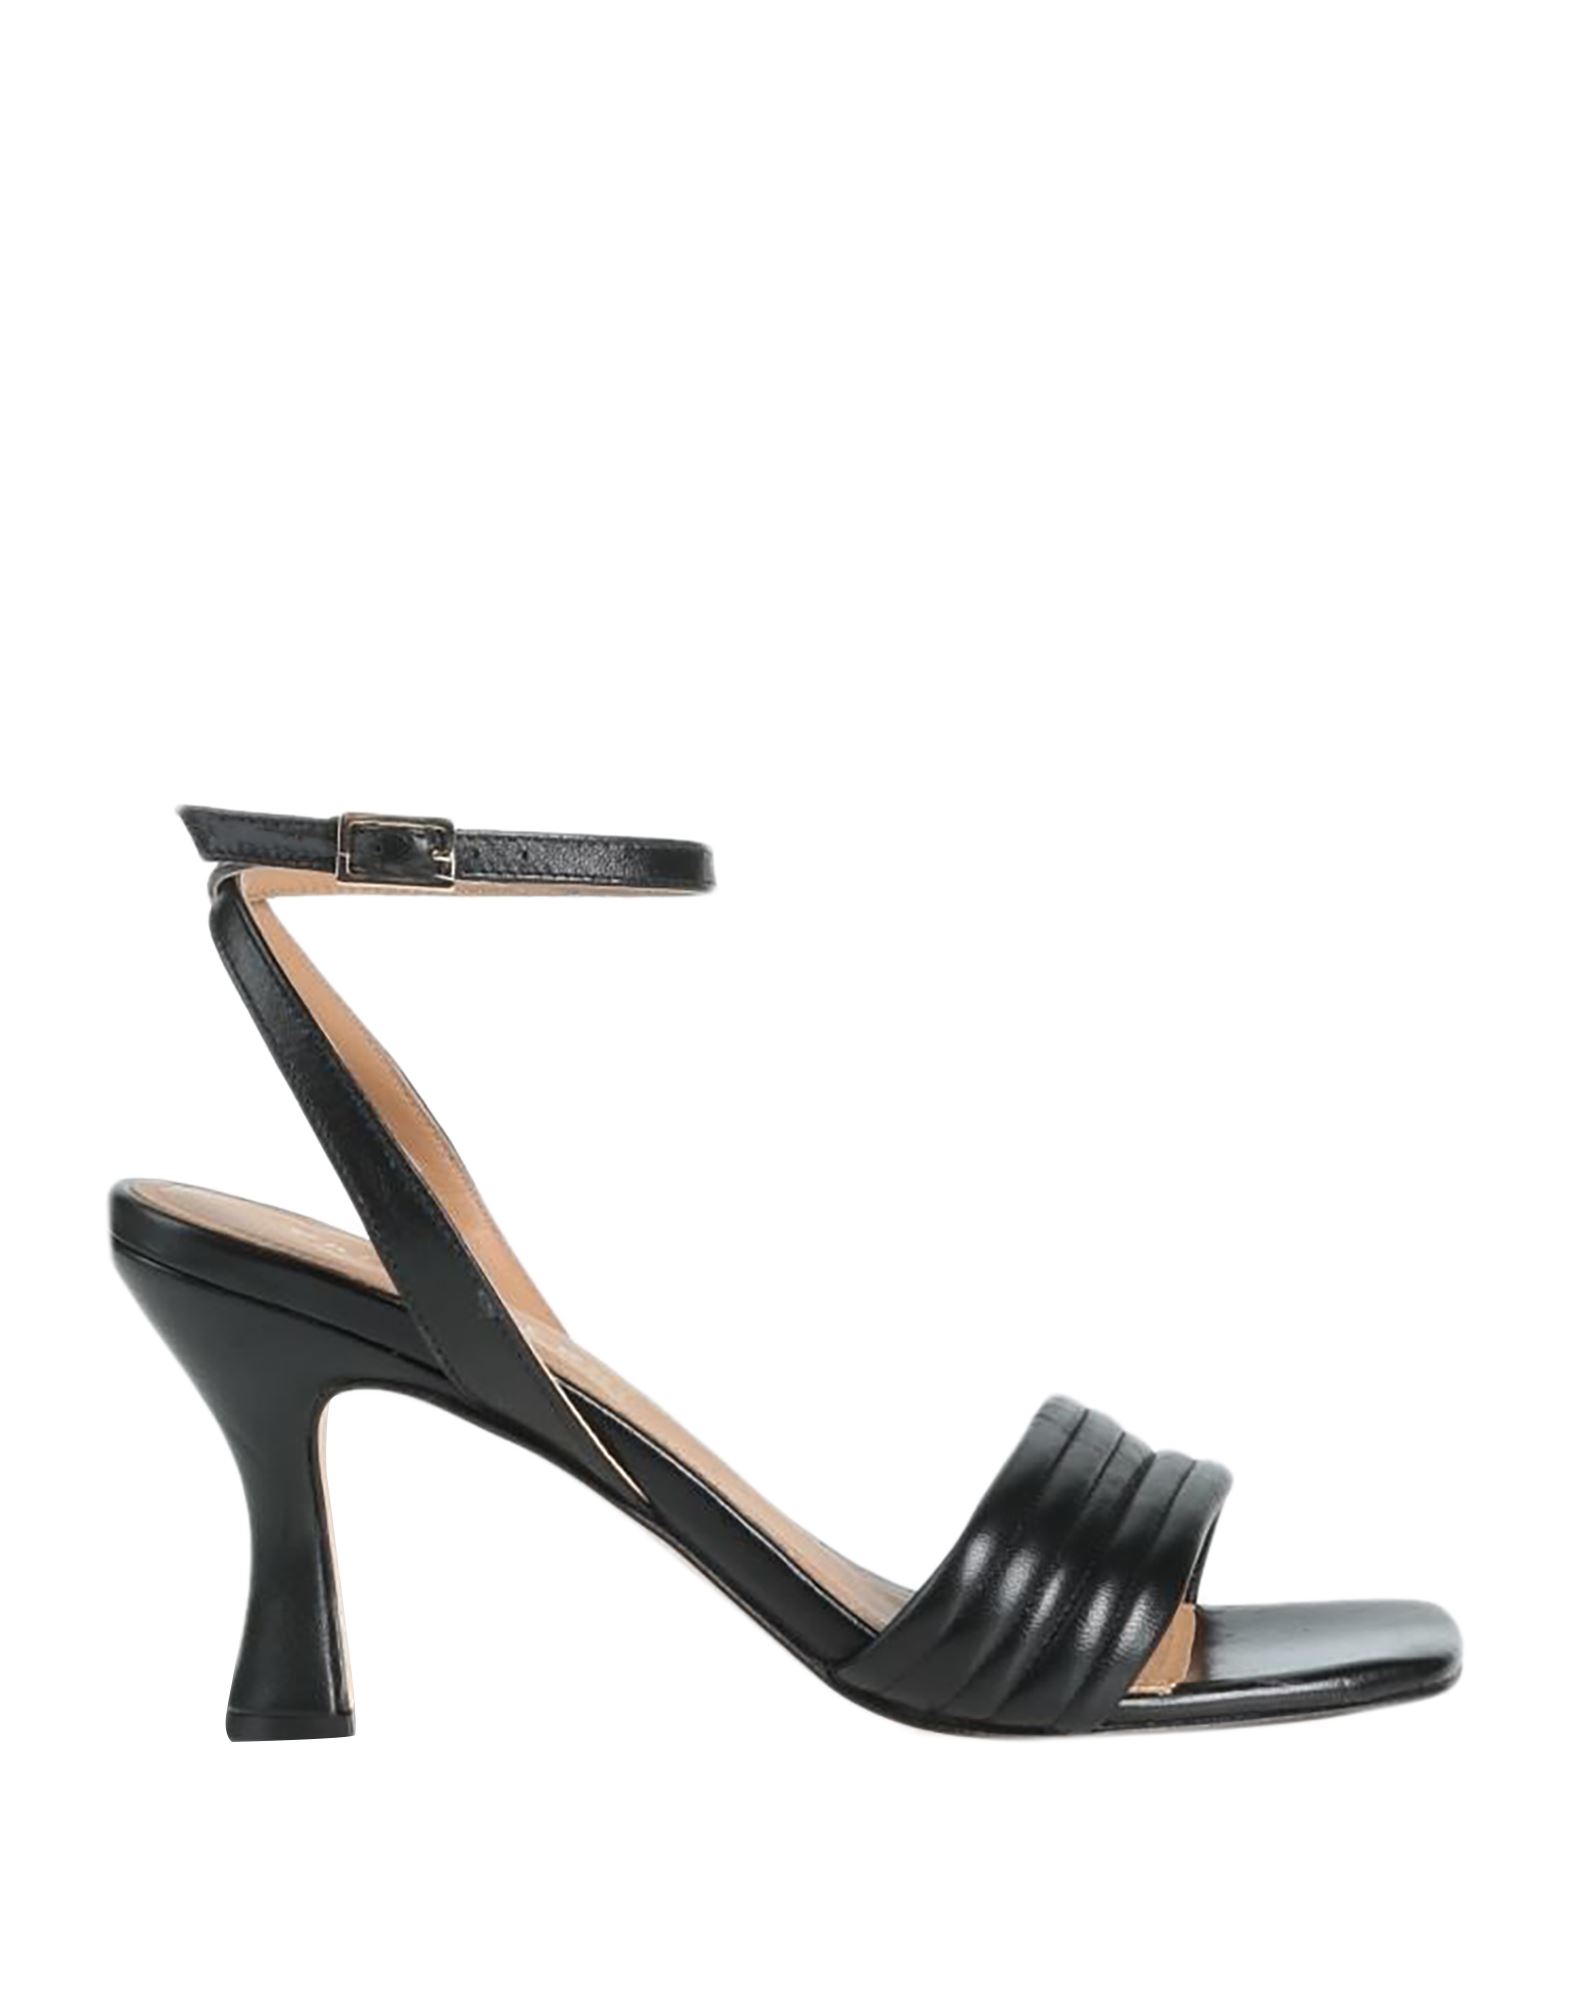 Paola Ferri Sandals In Black